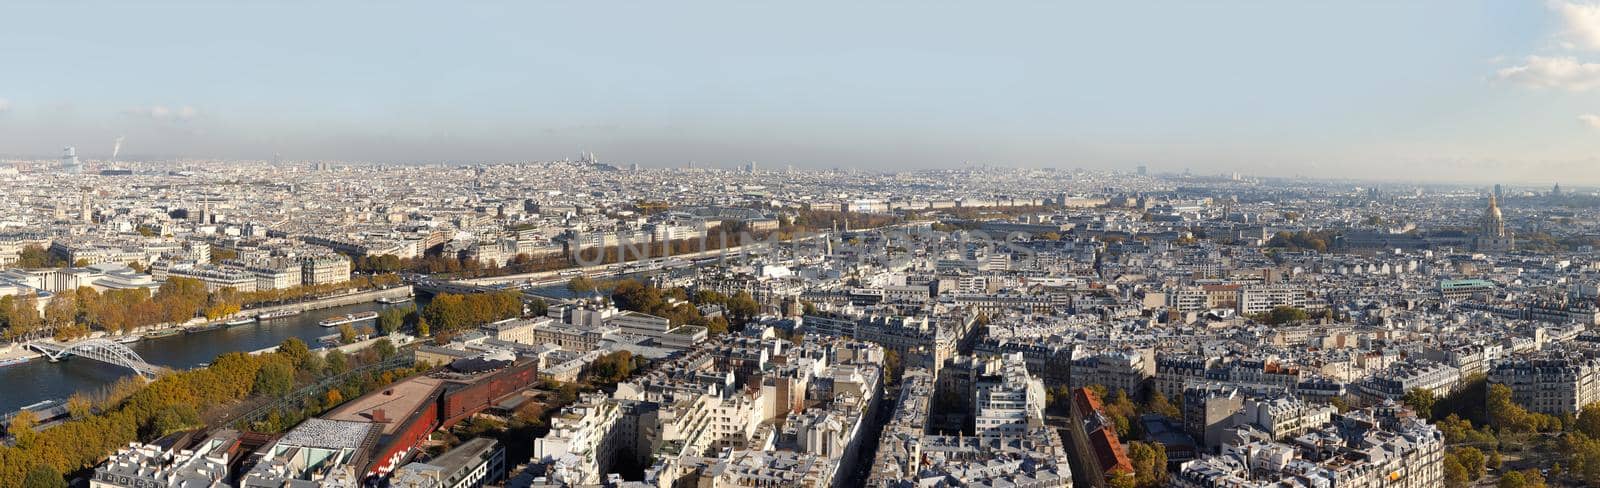 Cityscape of Paris City by palinchak